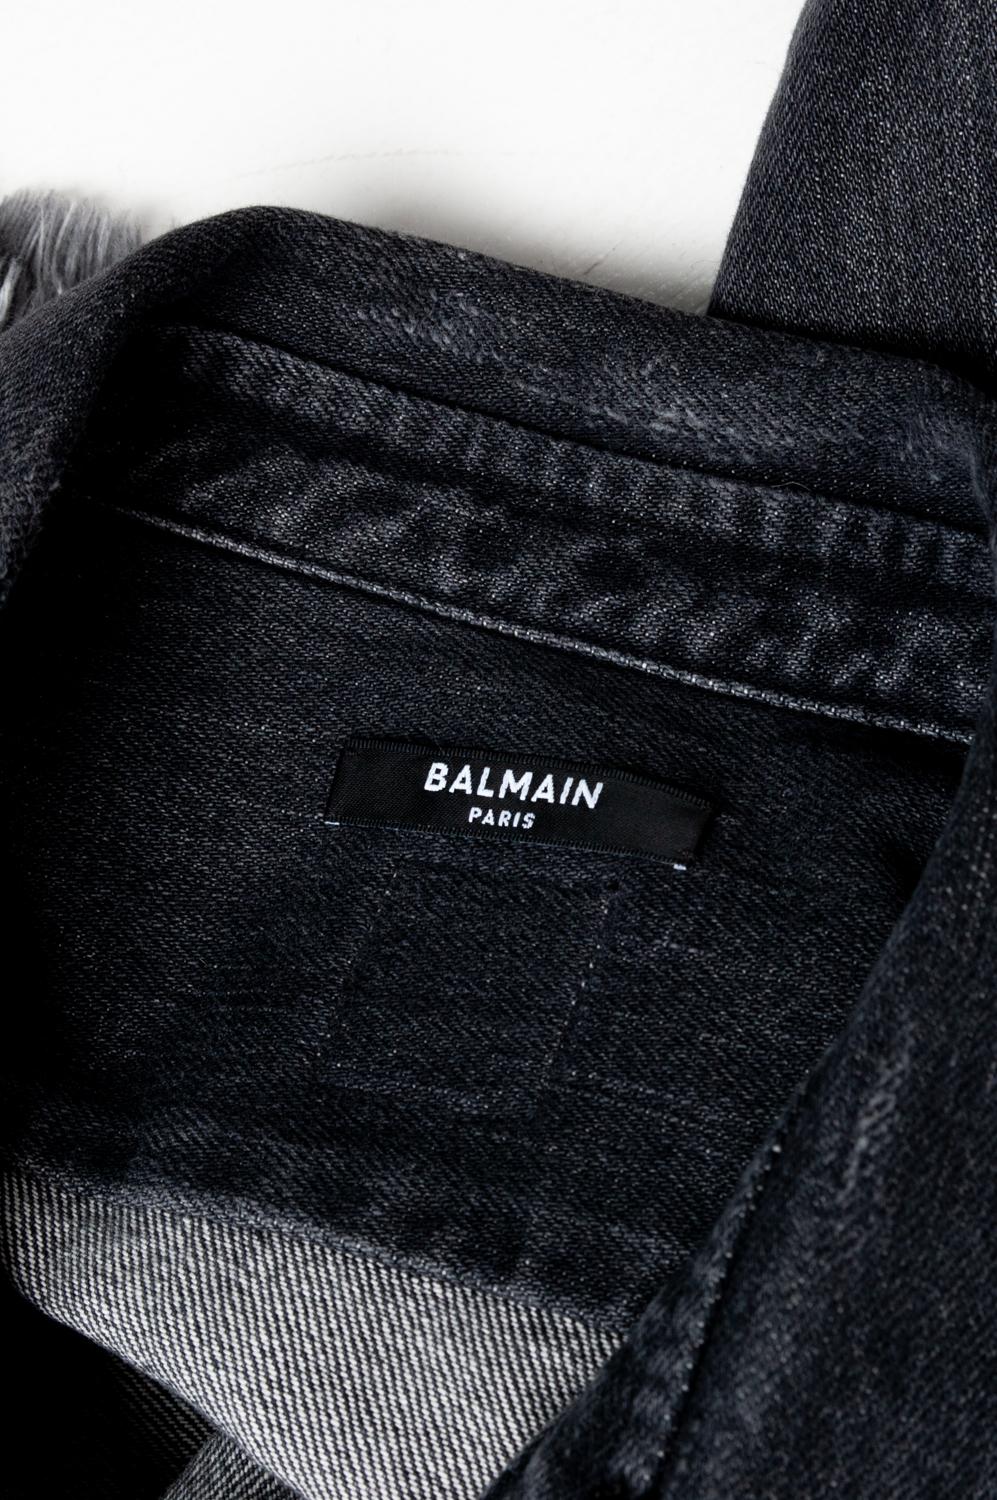 Balmain Paris Distressed Denim Over Shirt Men Jacket Size 40 (Medium) S603 For Sale 1